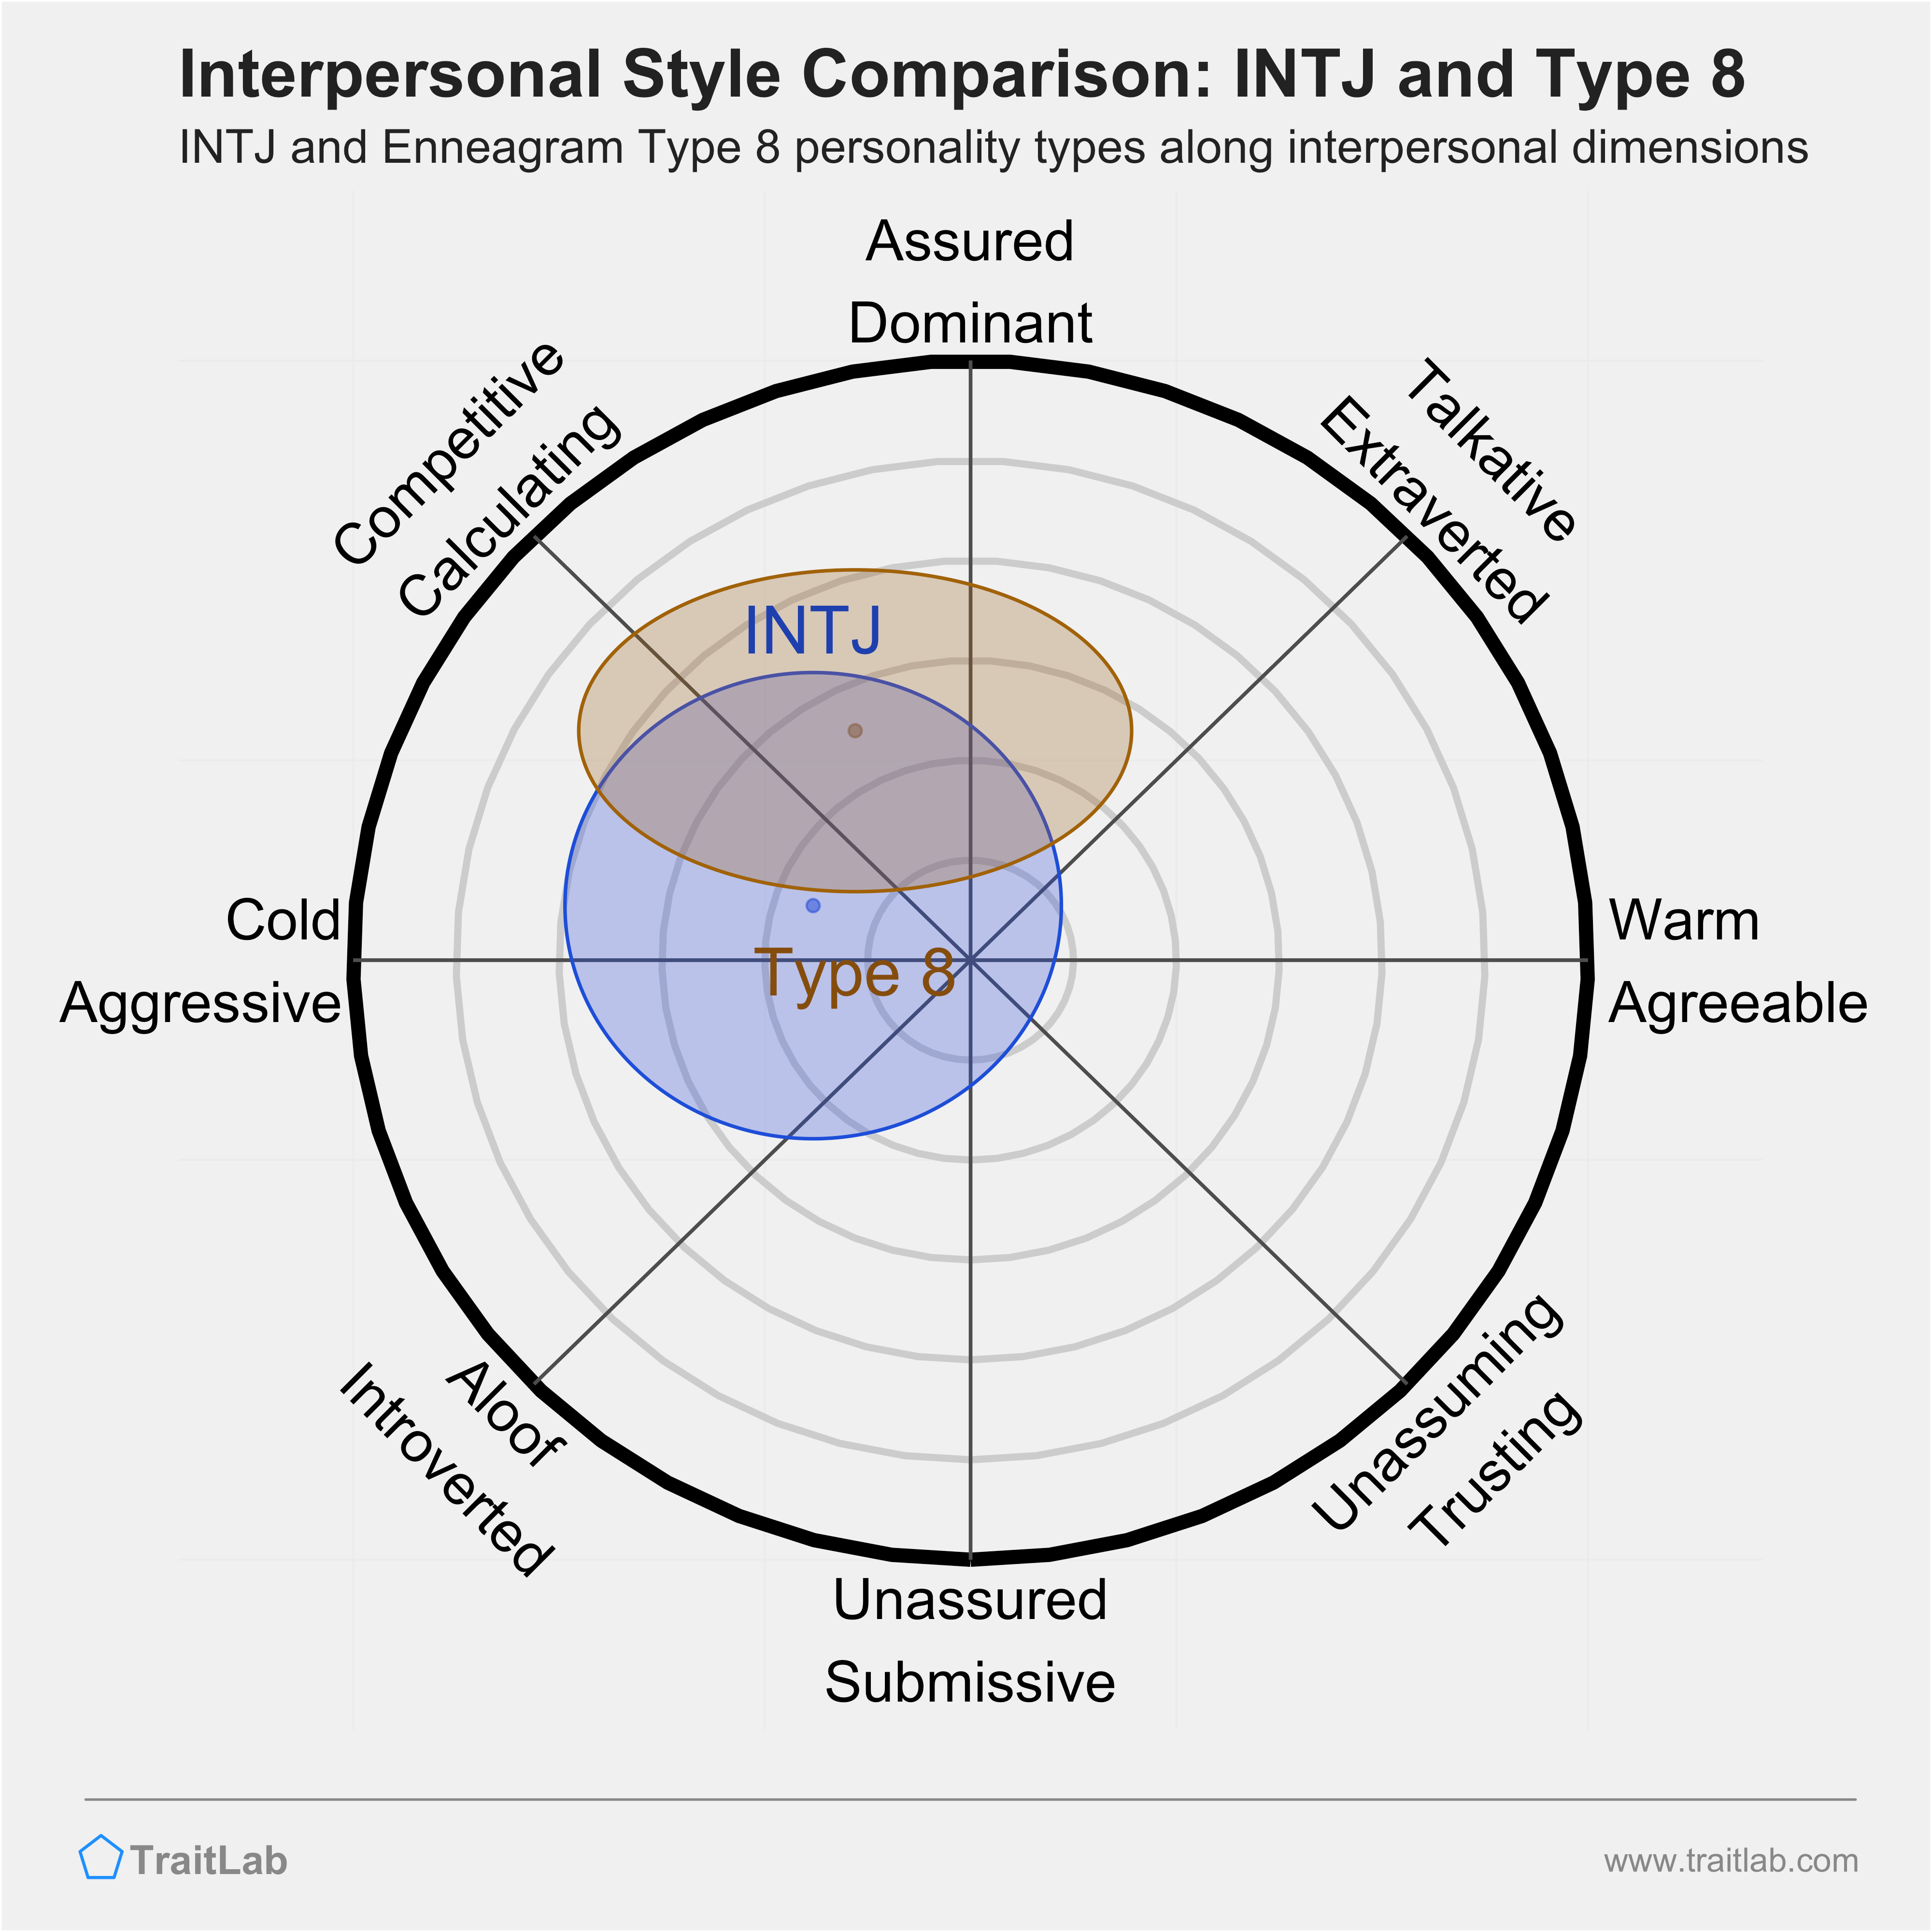 Enneagram INTJ and Type 8 comparison across interpersonal dimensions